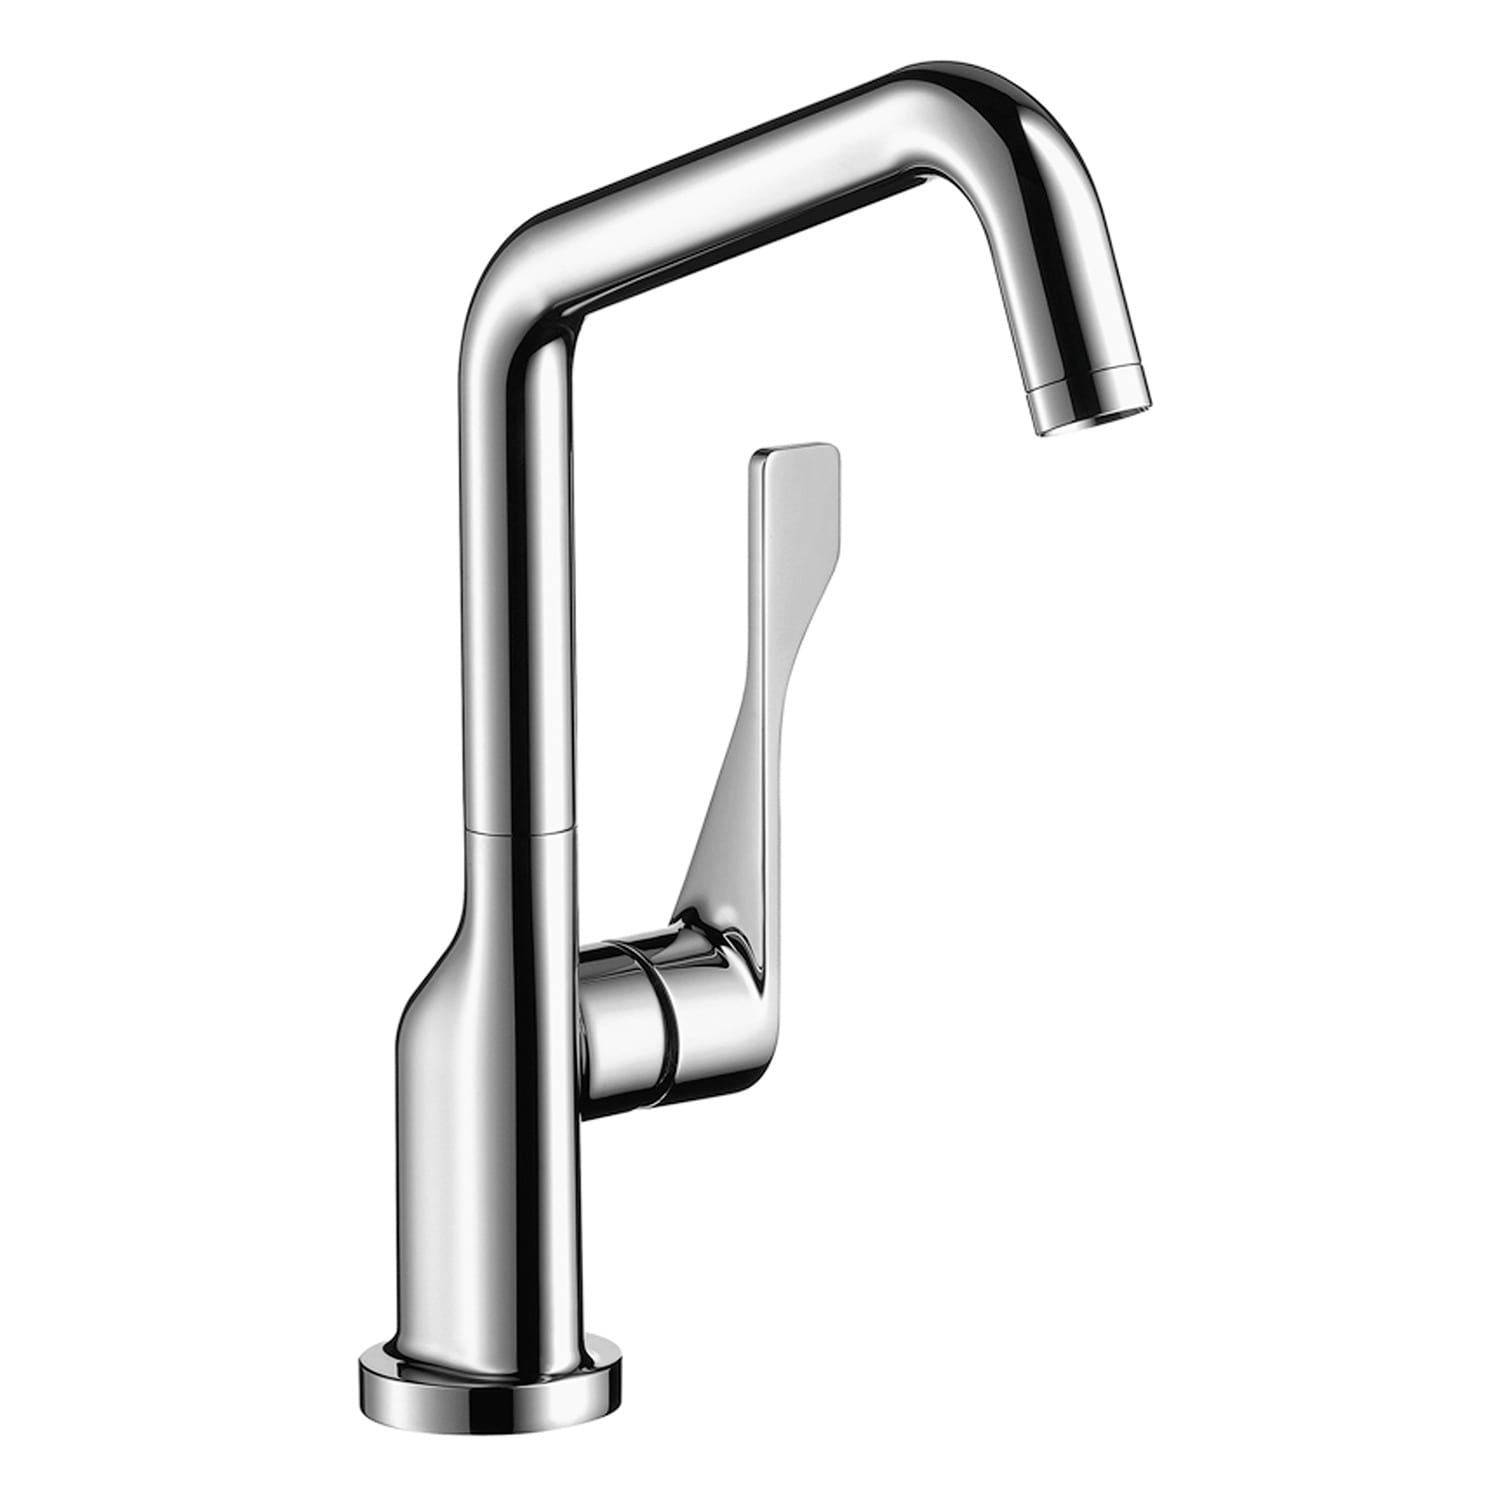 Axor 39850001 Citterio Single Hole/Single Control Kitchen Faucet 